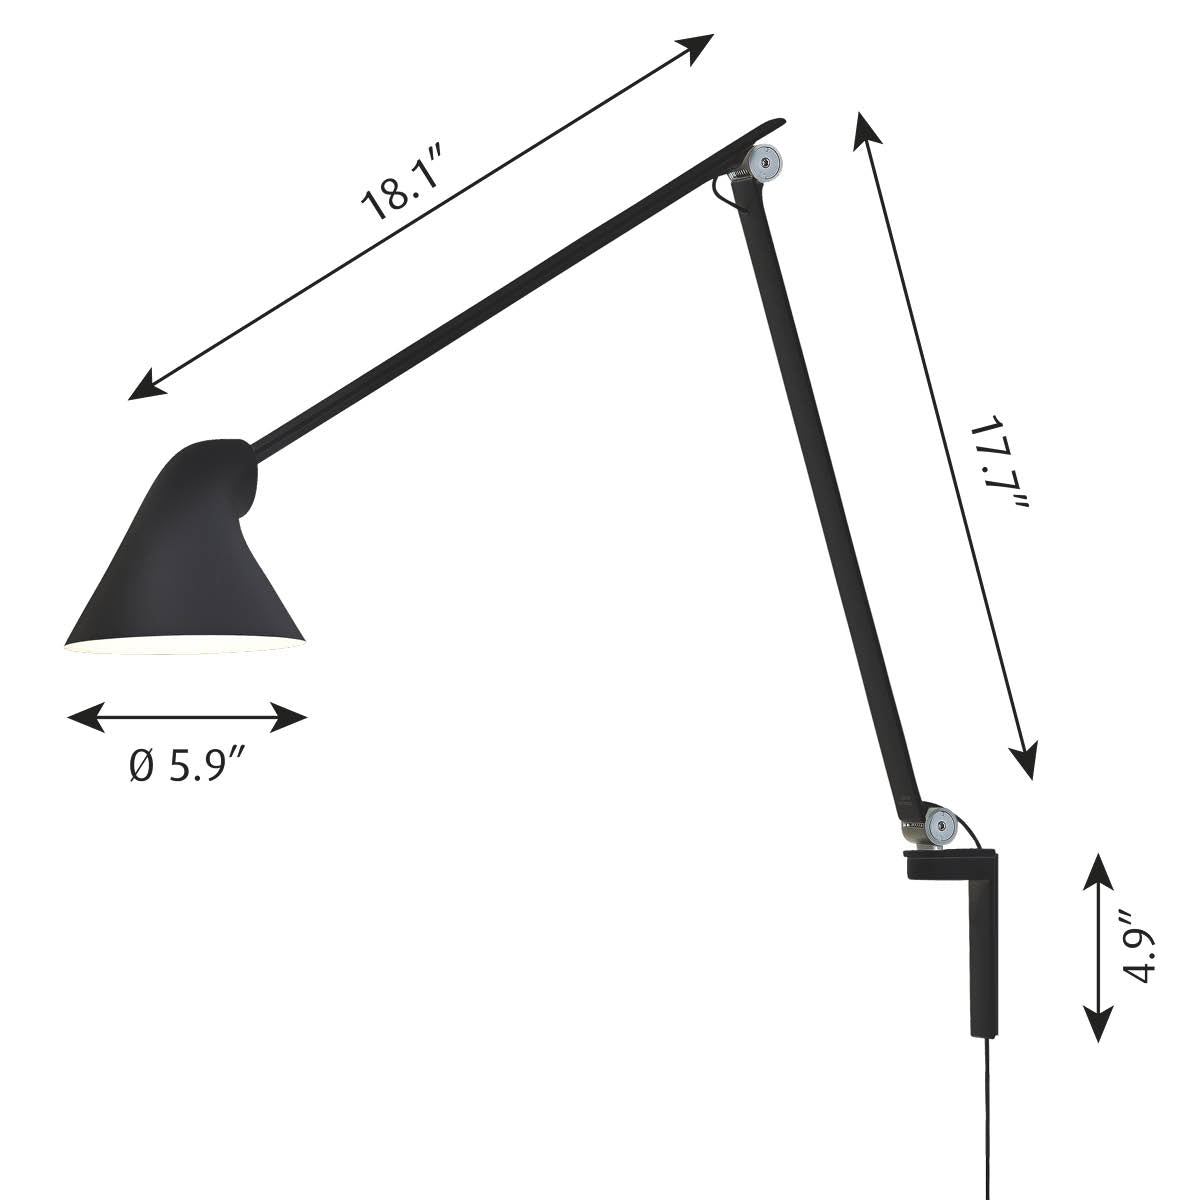 Louis Poulsen - NJP Table Lamp designed by nendo. A new